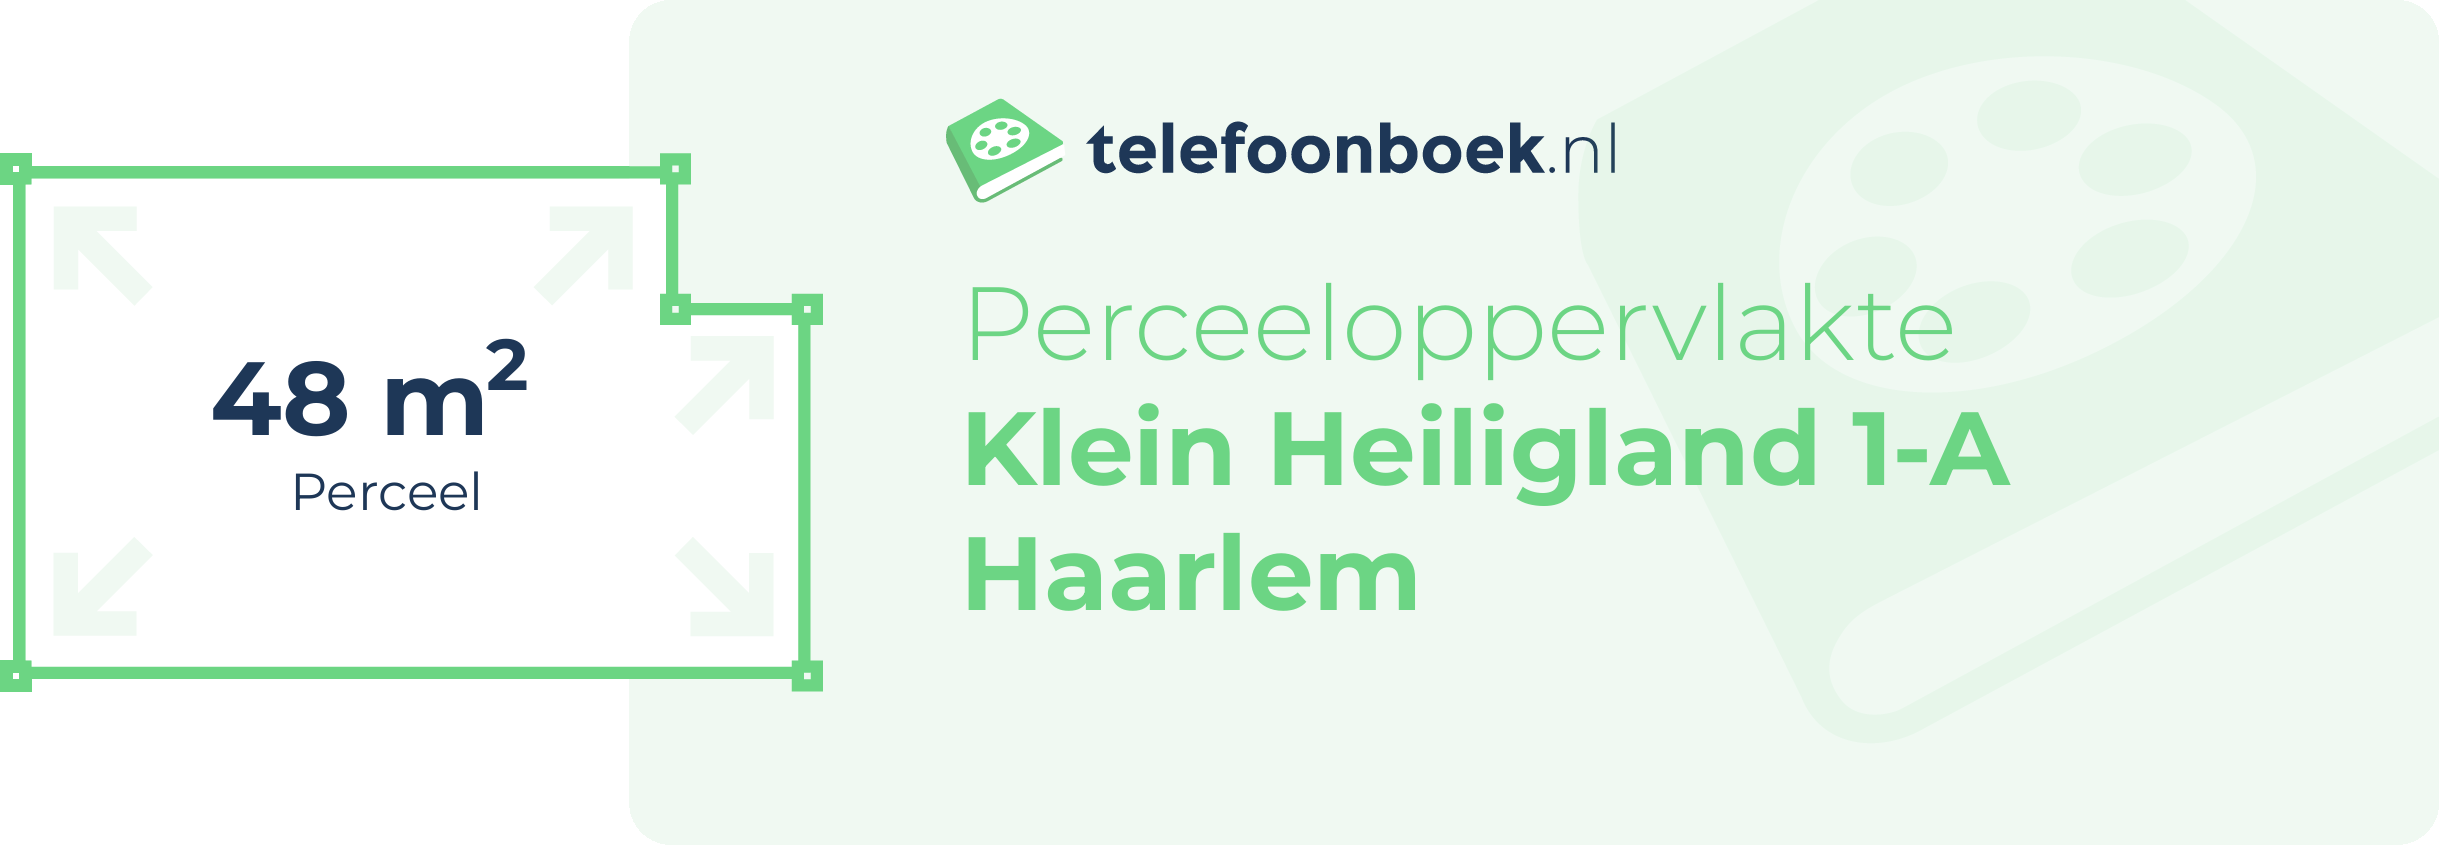 Perceeloppervlakte Klein Heiligland 1-A Haarlem